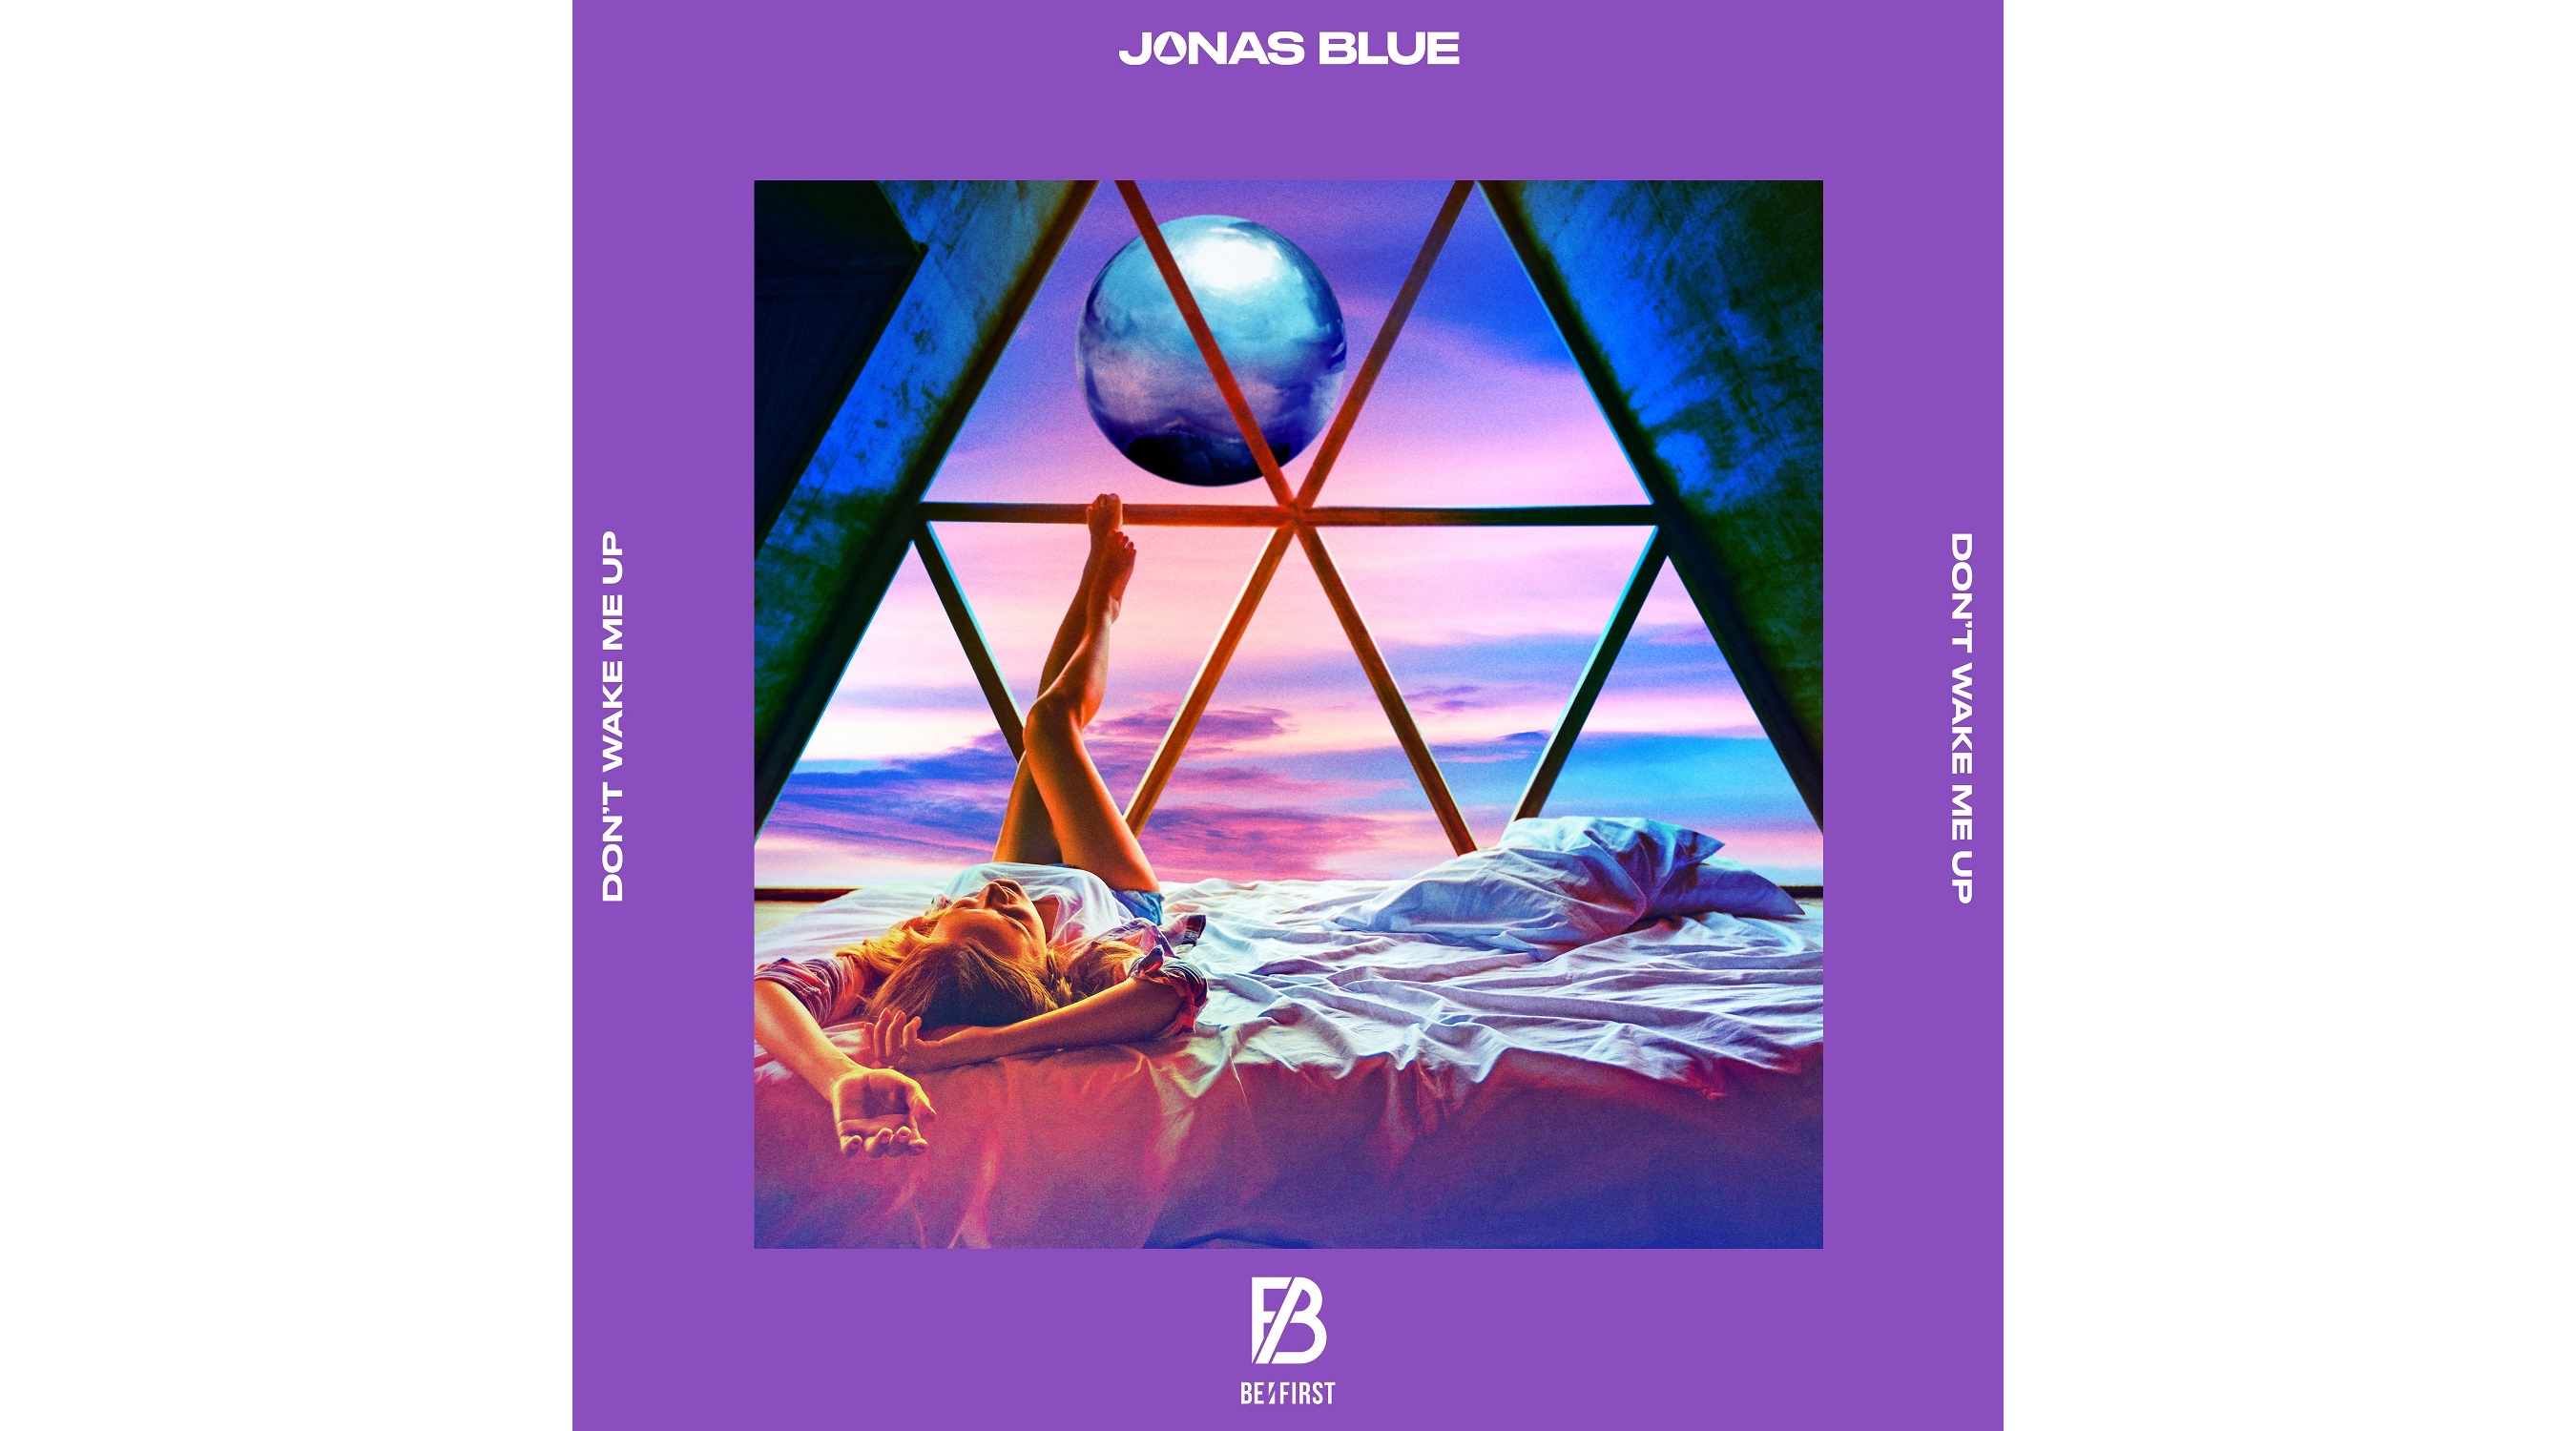 JonasBlue-DontWakeMeUp-Japan-V1